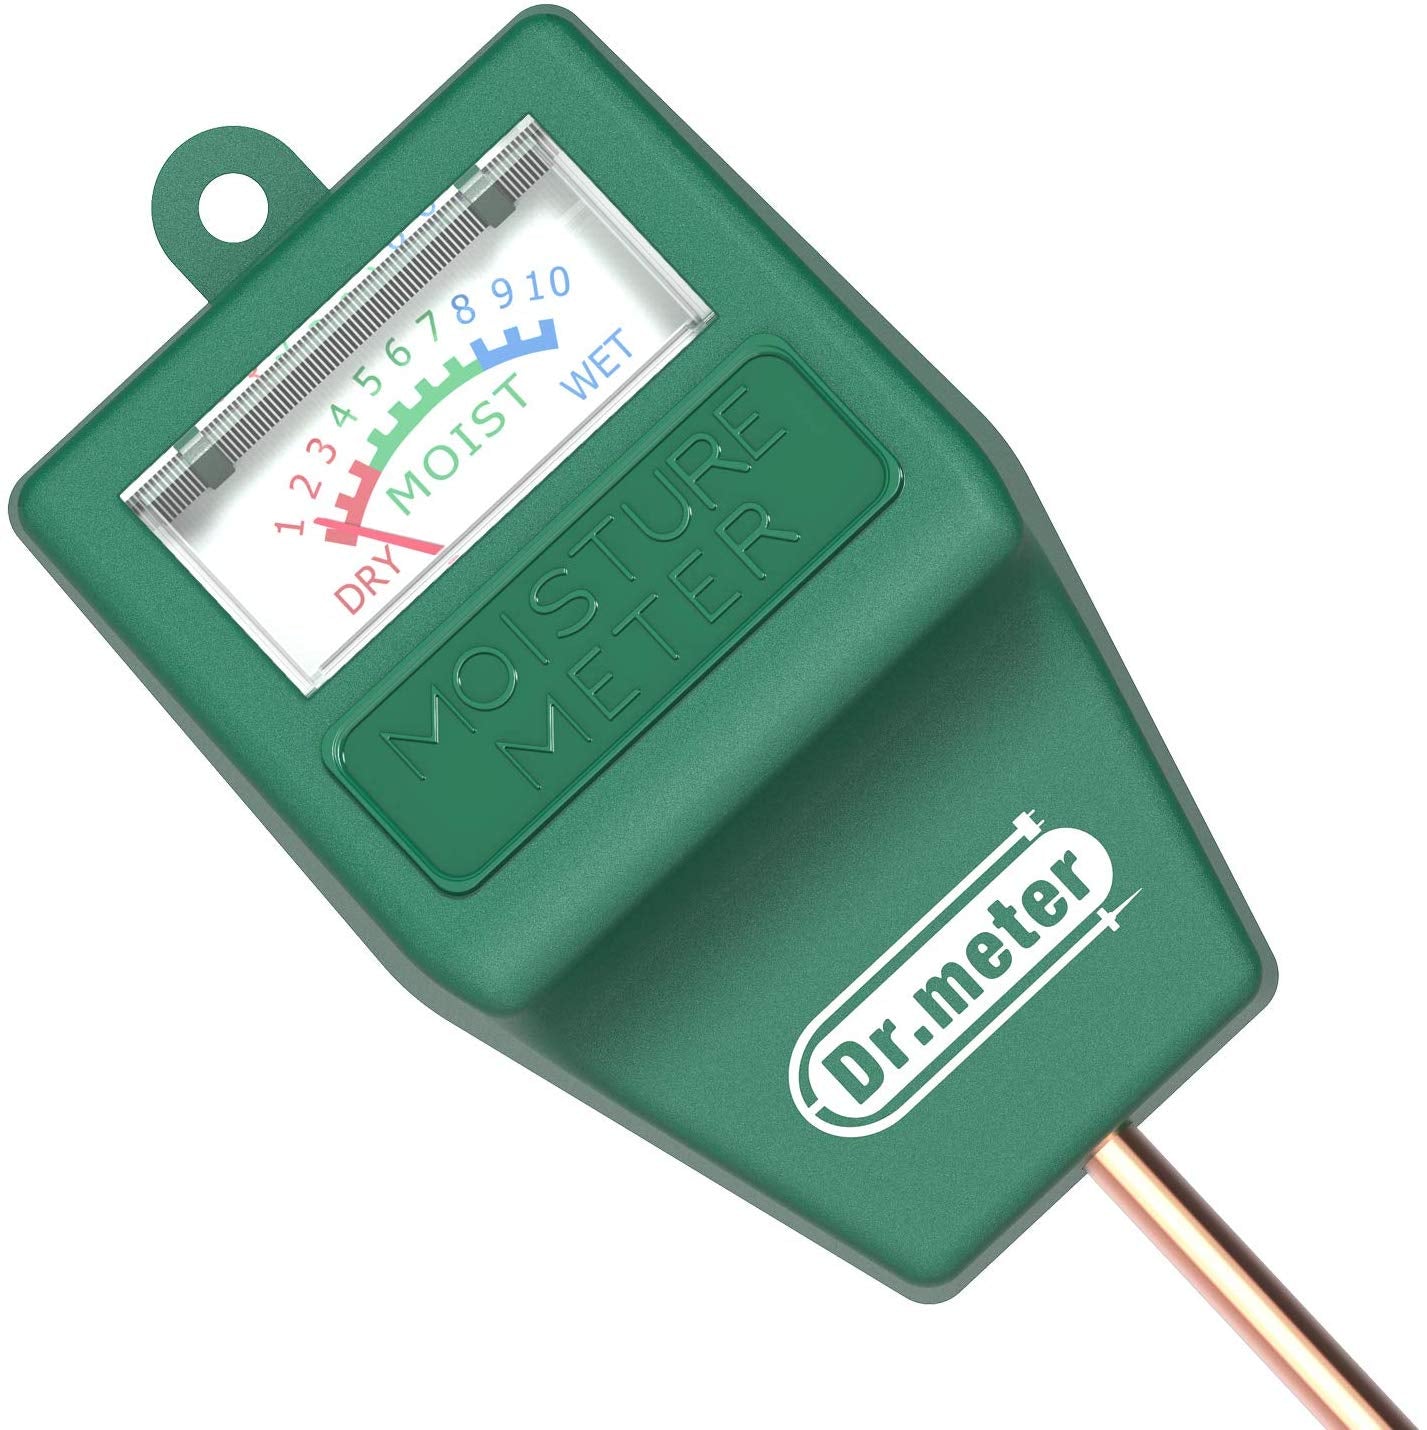 Hotbest Soil Moisture Sensor Meter Soil Water Monitor Hydrometer for Gardening Farming No Batteries Required, Size: 2pcs, Green